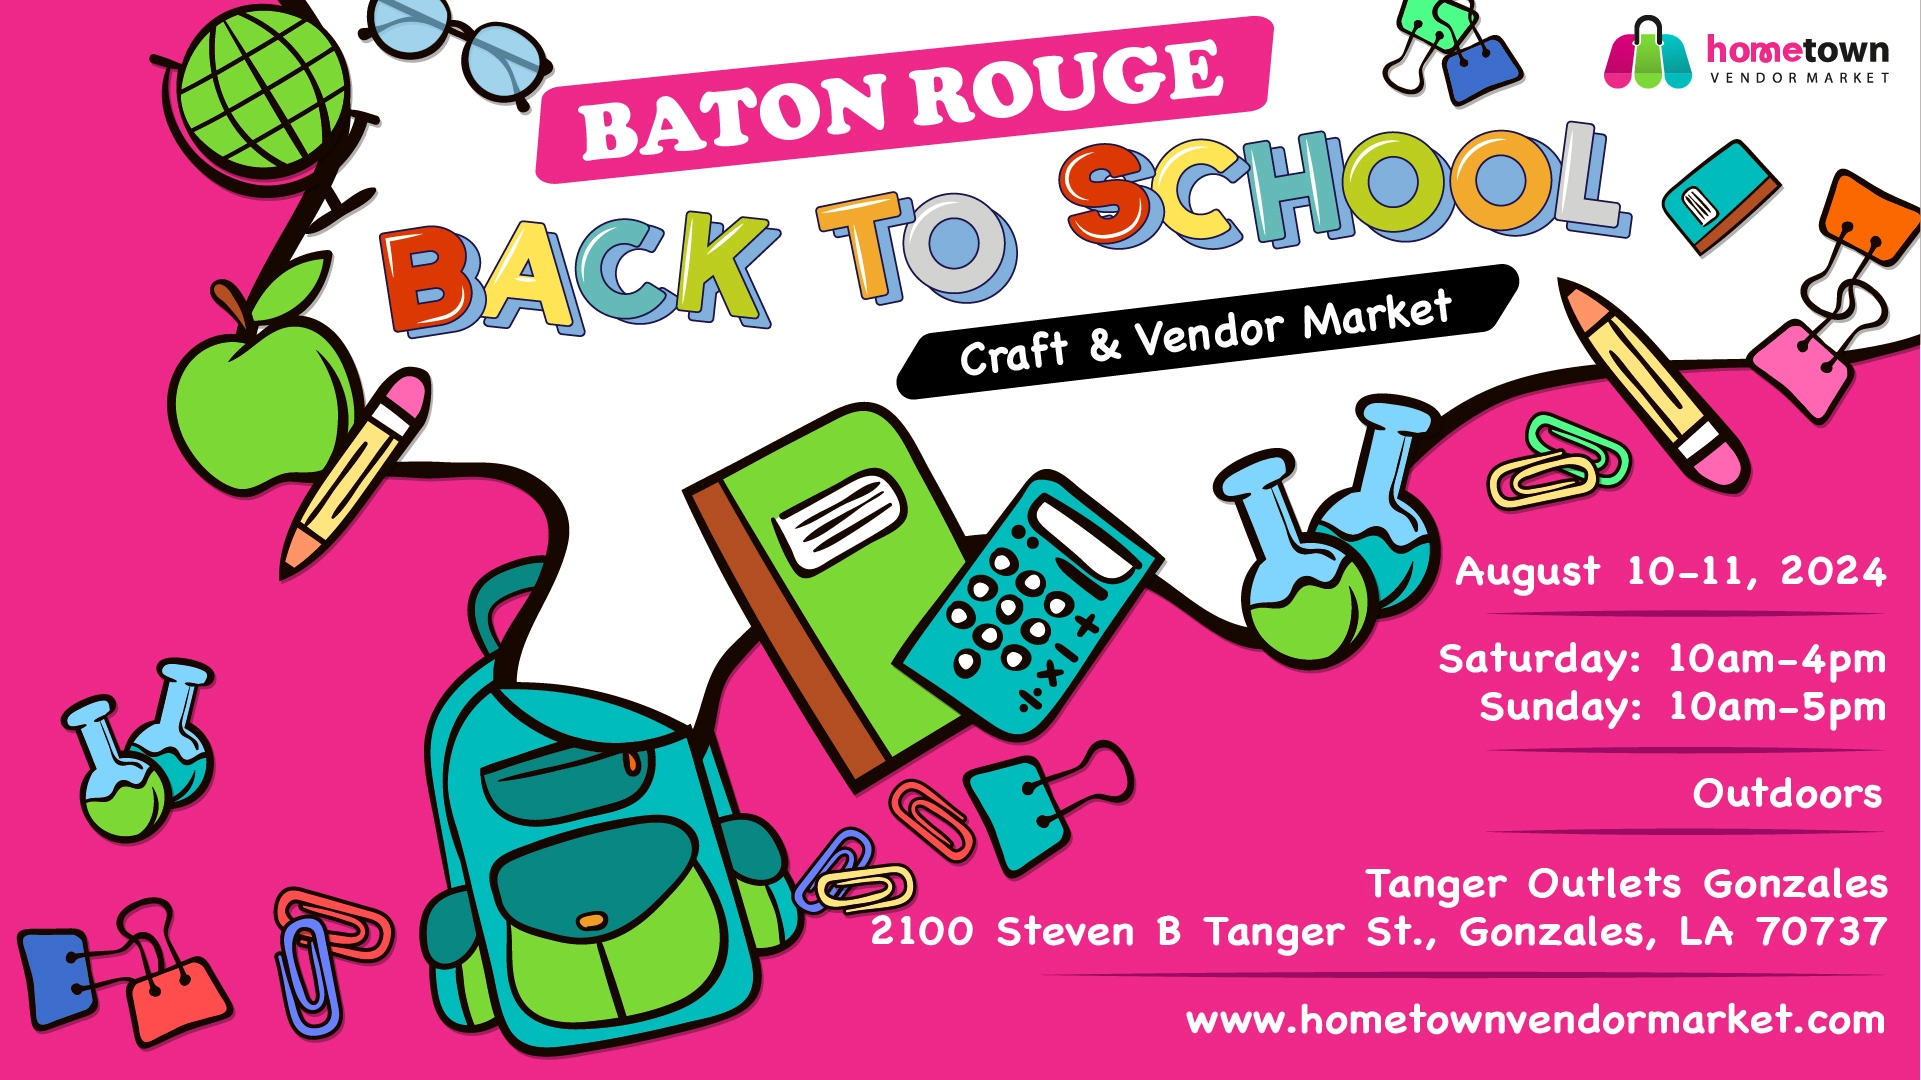 Baton Rouge Back to School